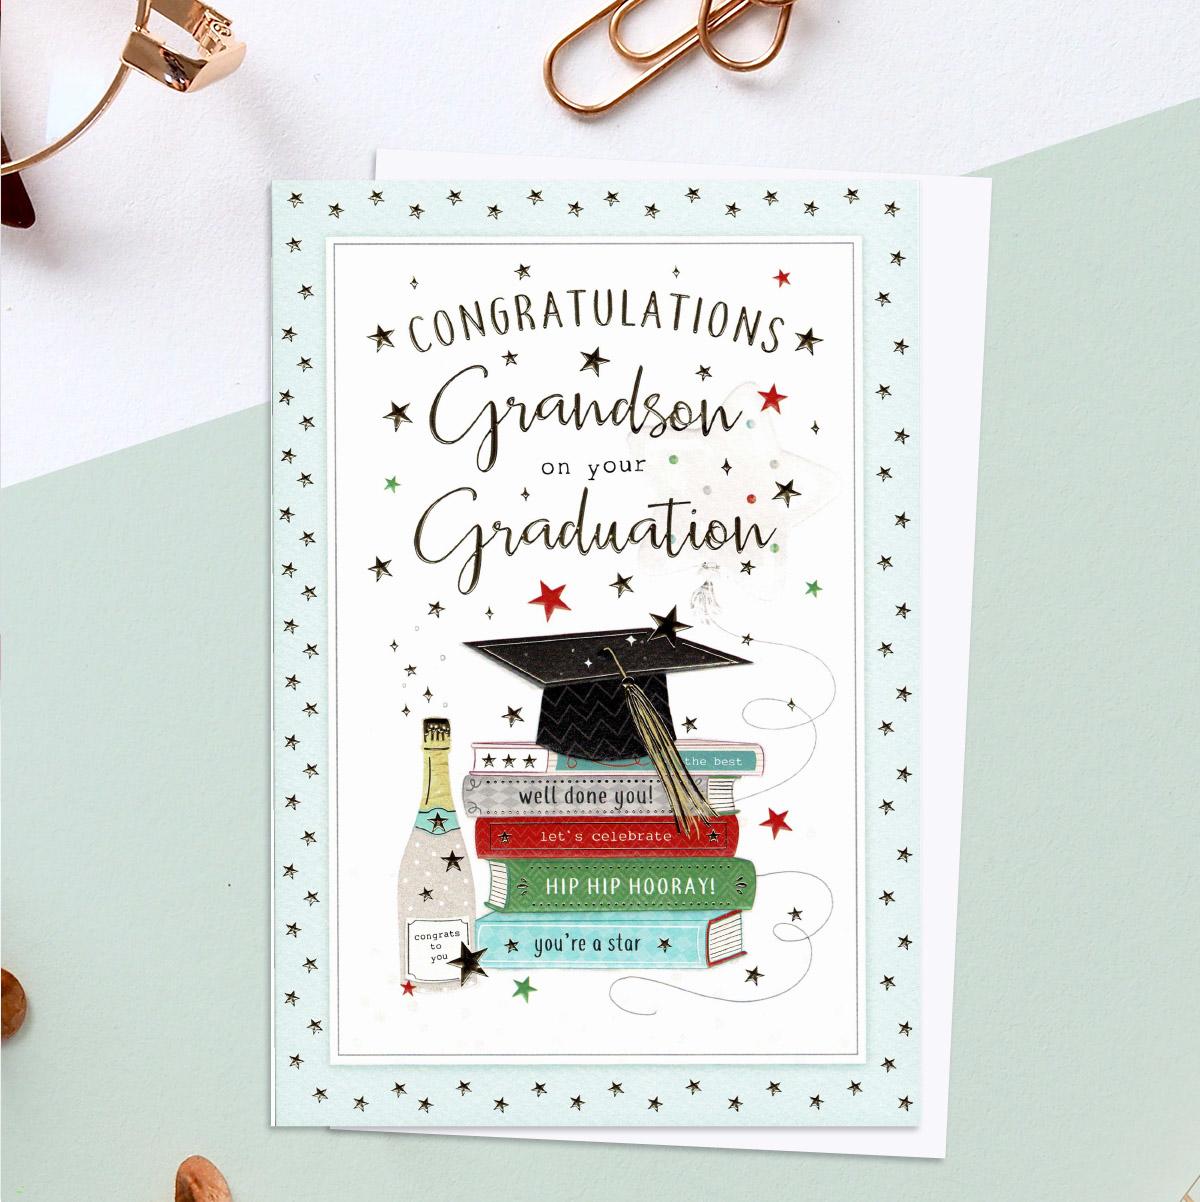 Congratulations Grandson On Your Graduation  Card Front Image